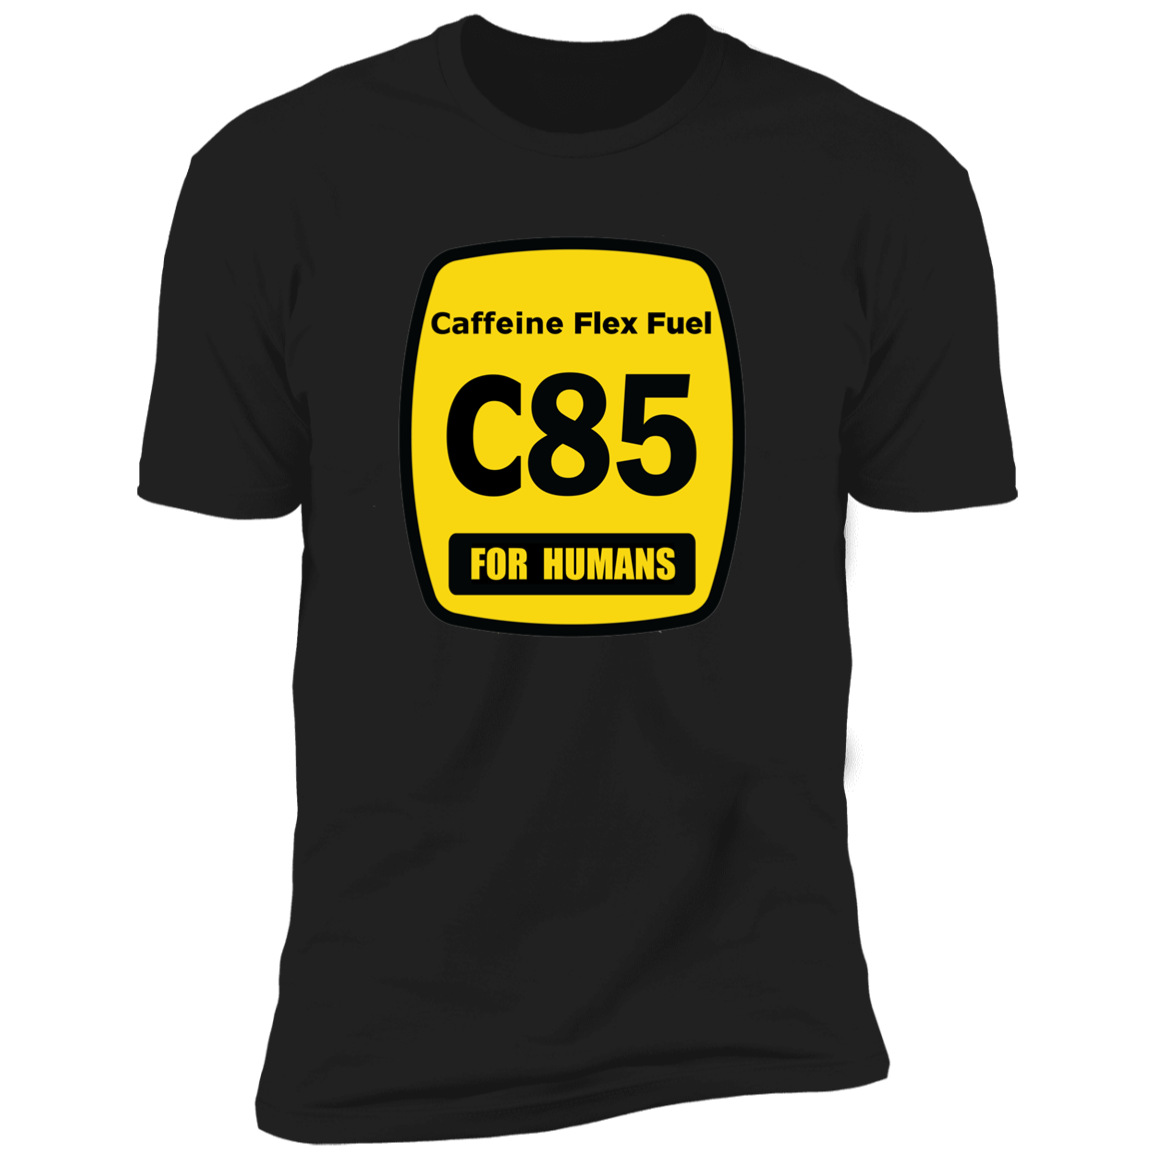 C85 Caffeine Flex Fuel Premium Short Sleeve T-Shirt